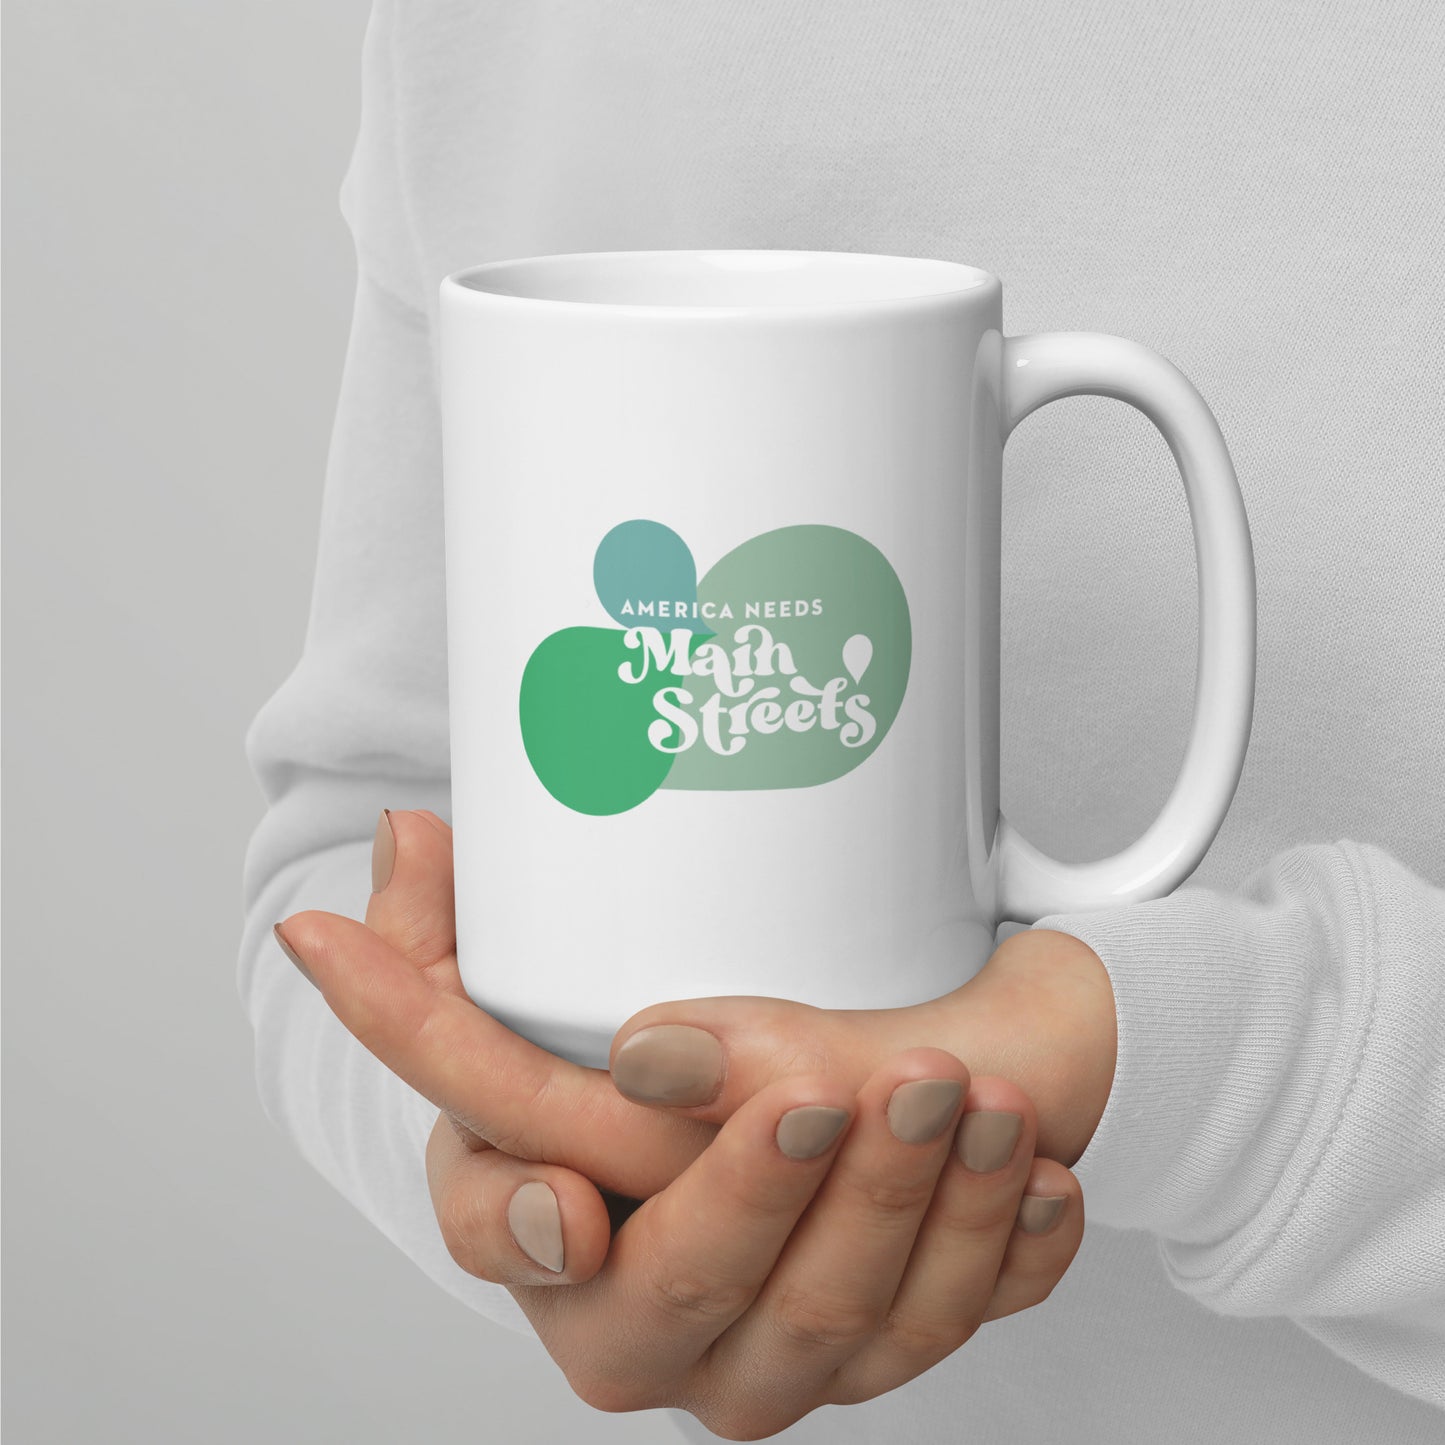 "America Needs Main Streets" Green White Glossy Mug